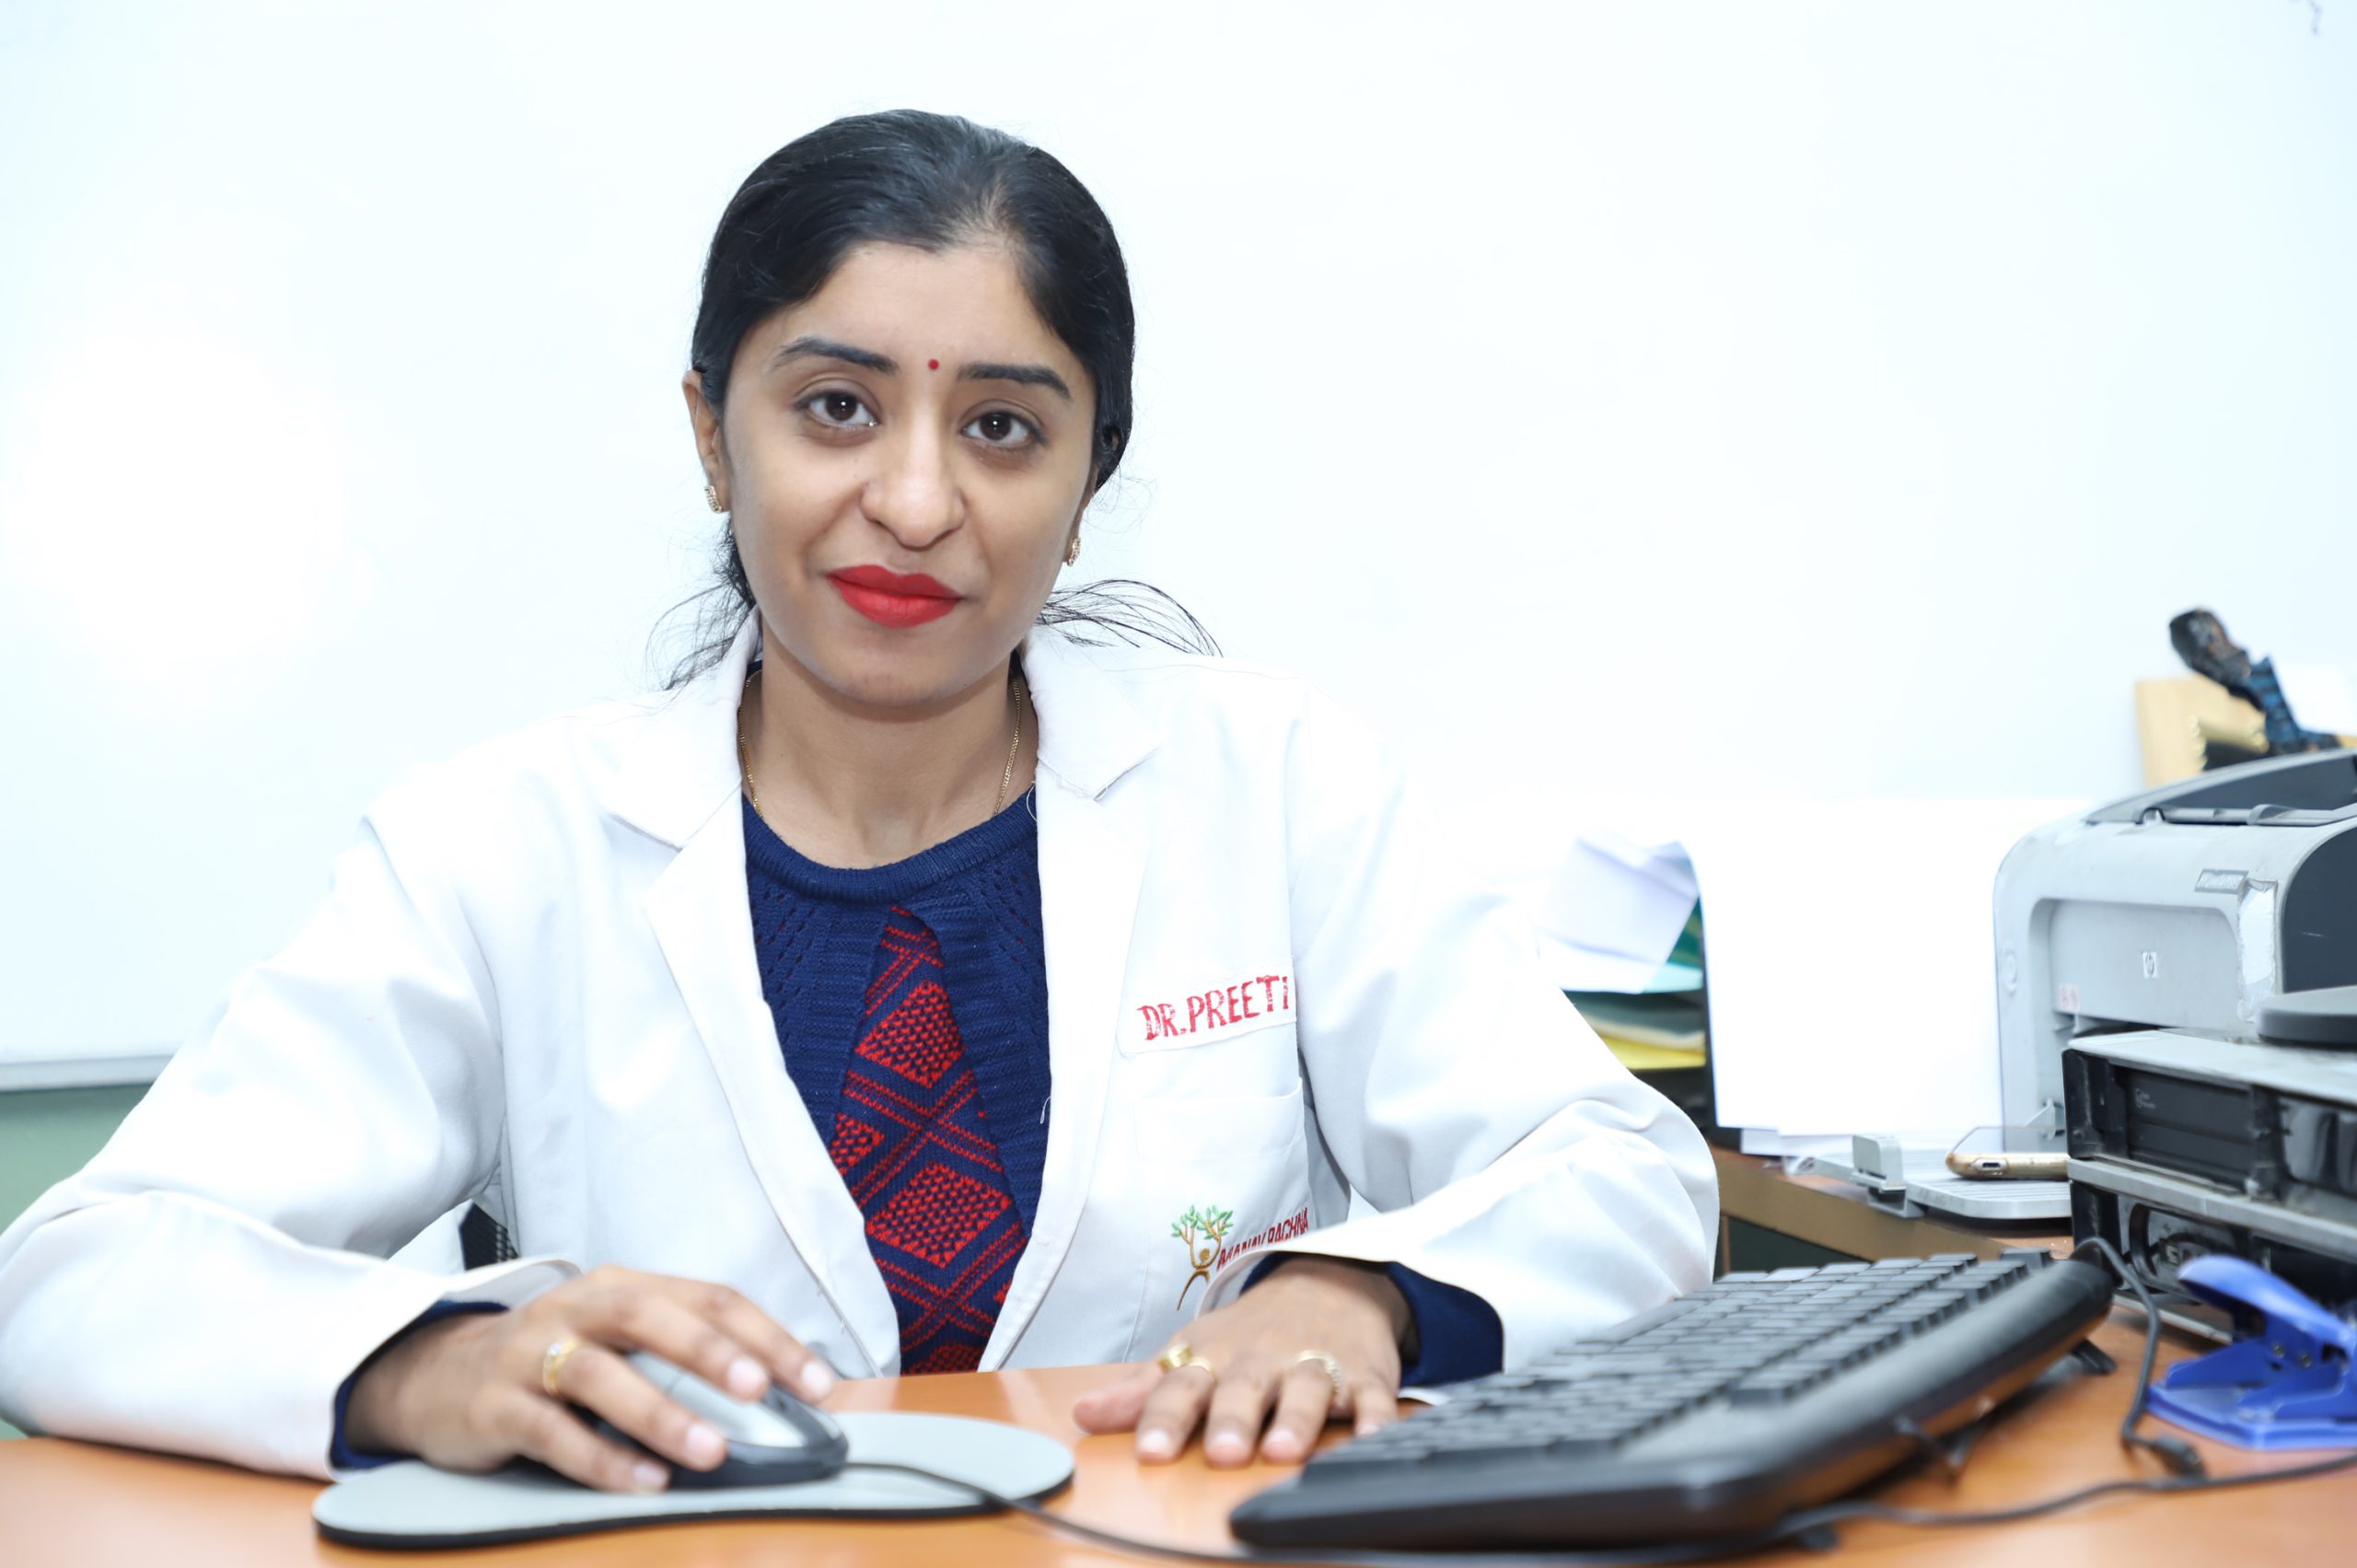 Dr. Preeti Saini